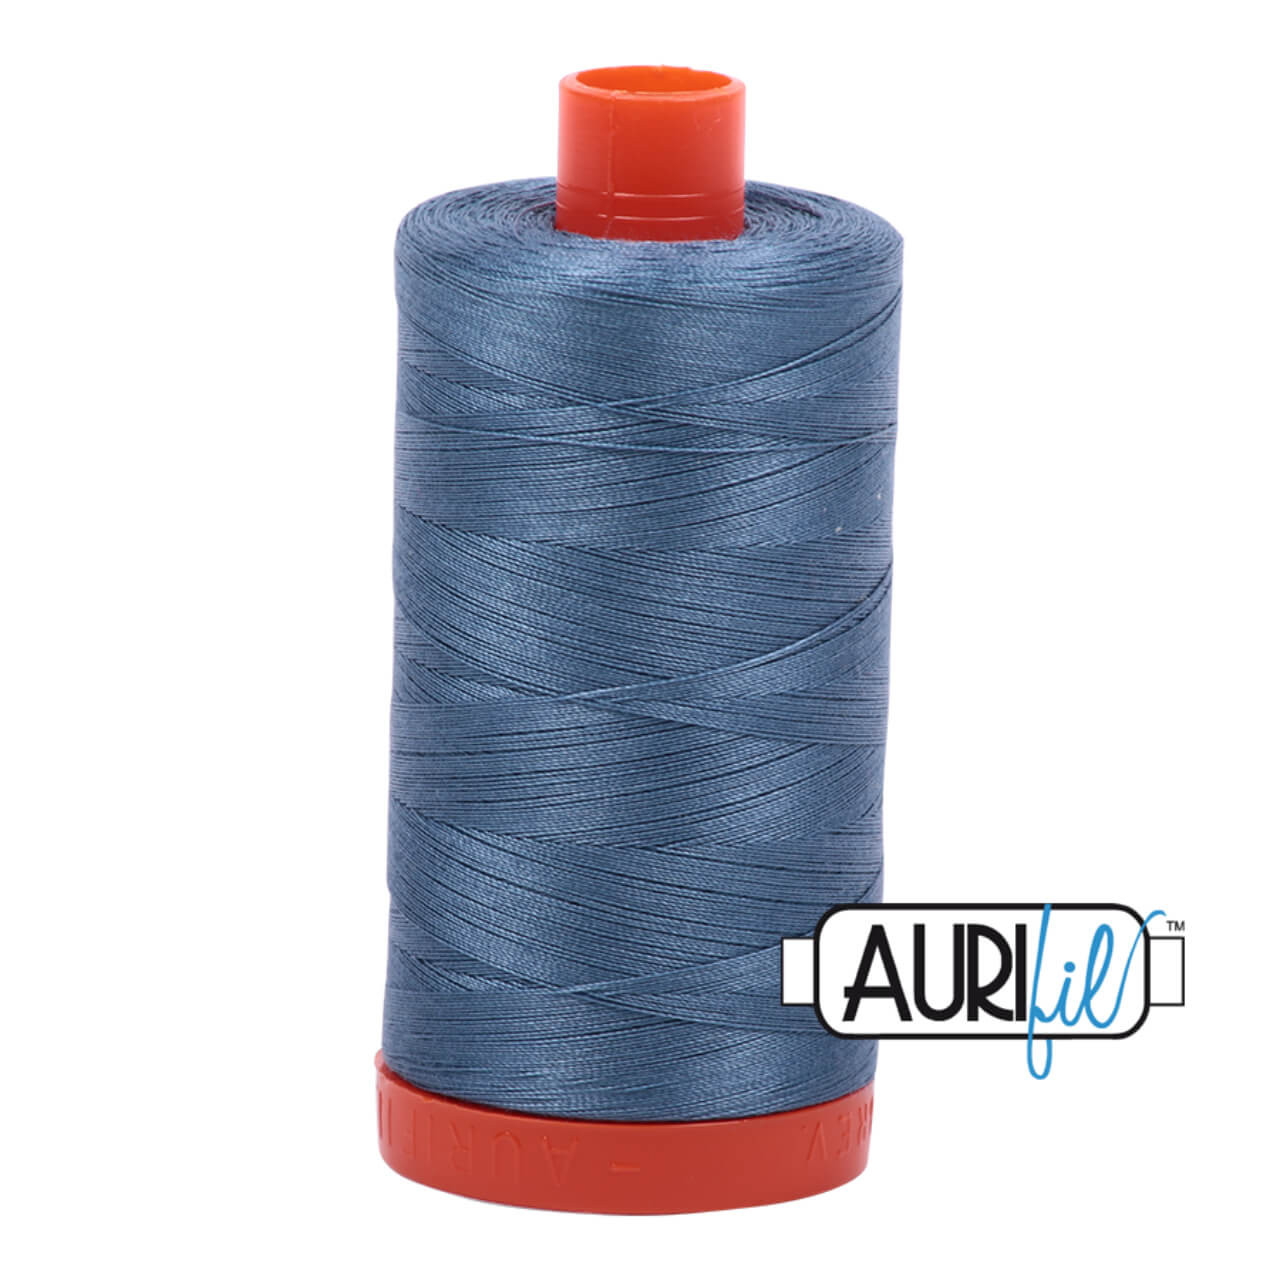 Large spool of Aurifil Blue Grey 50wt Egyptian cotton thread on orange spool with Aurifil Logo.